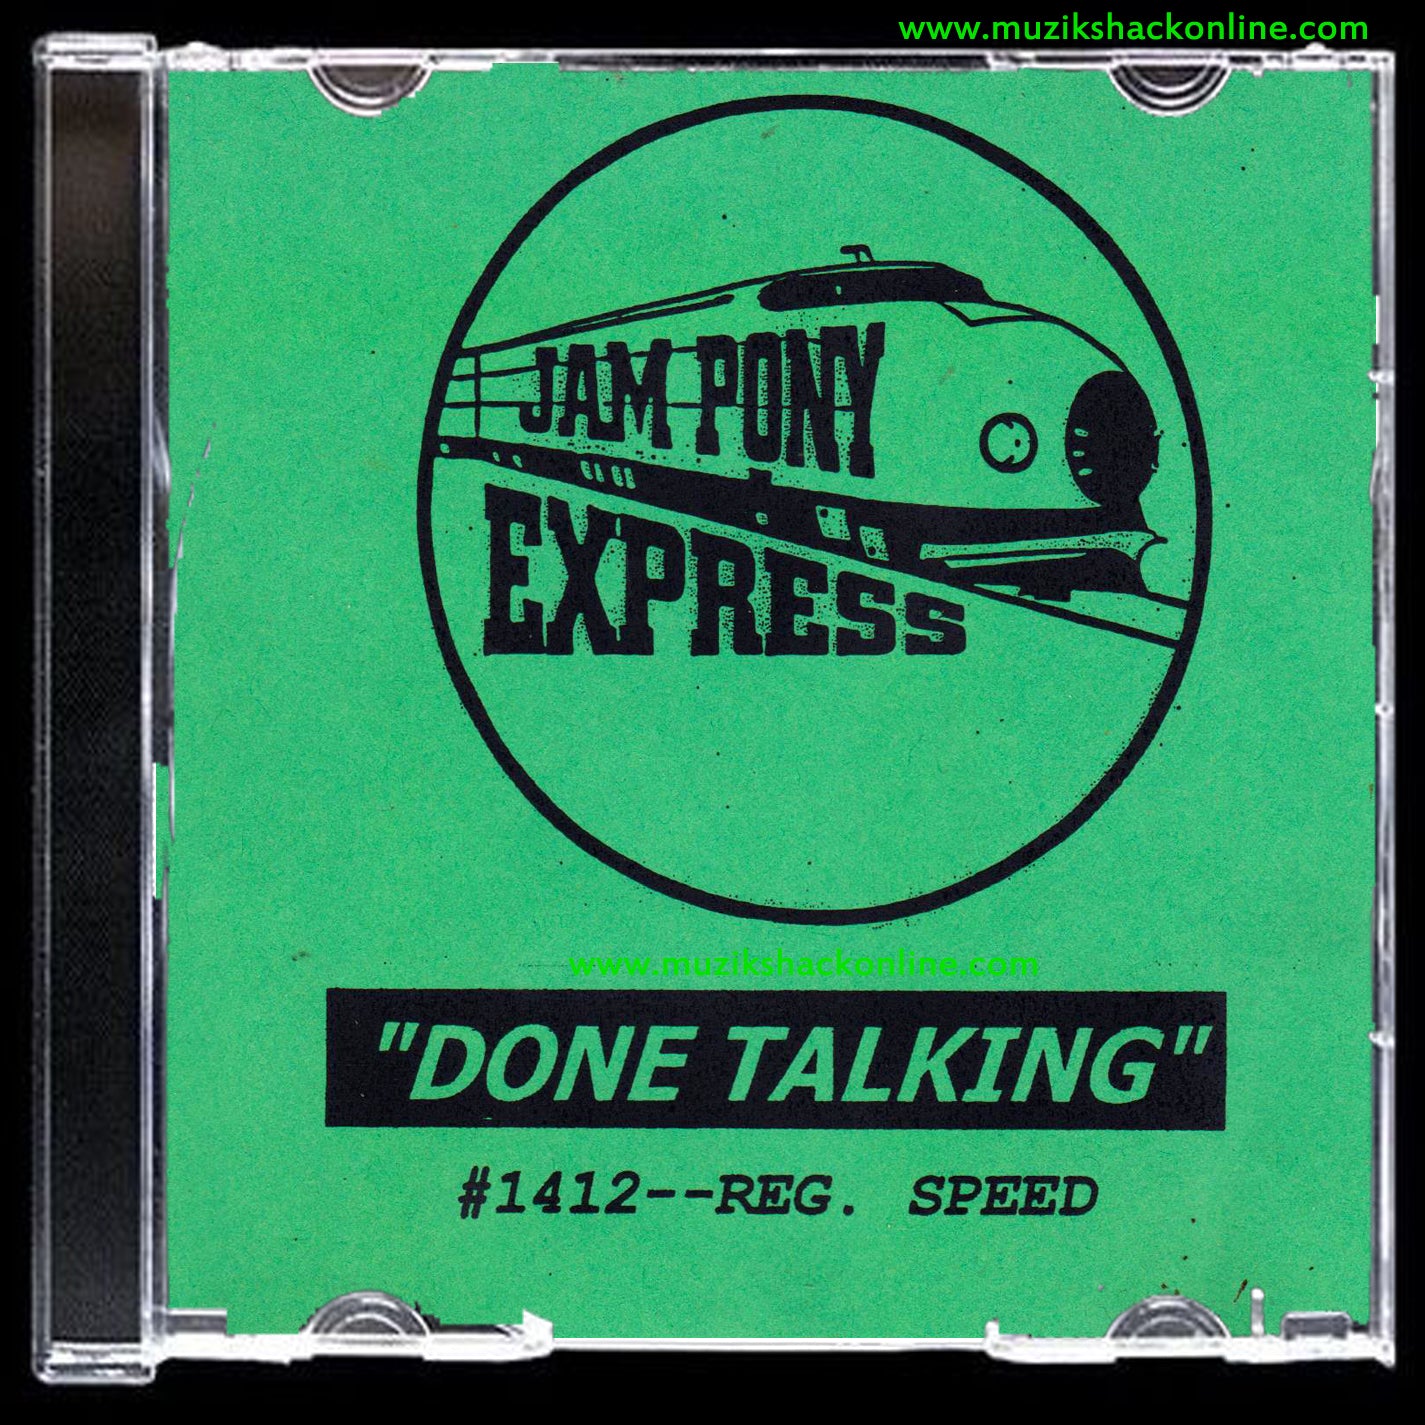 JAM PONY - DONE TALKING (RARE COPY) c2002